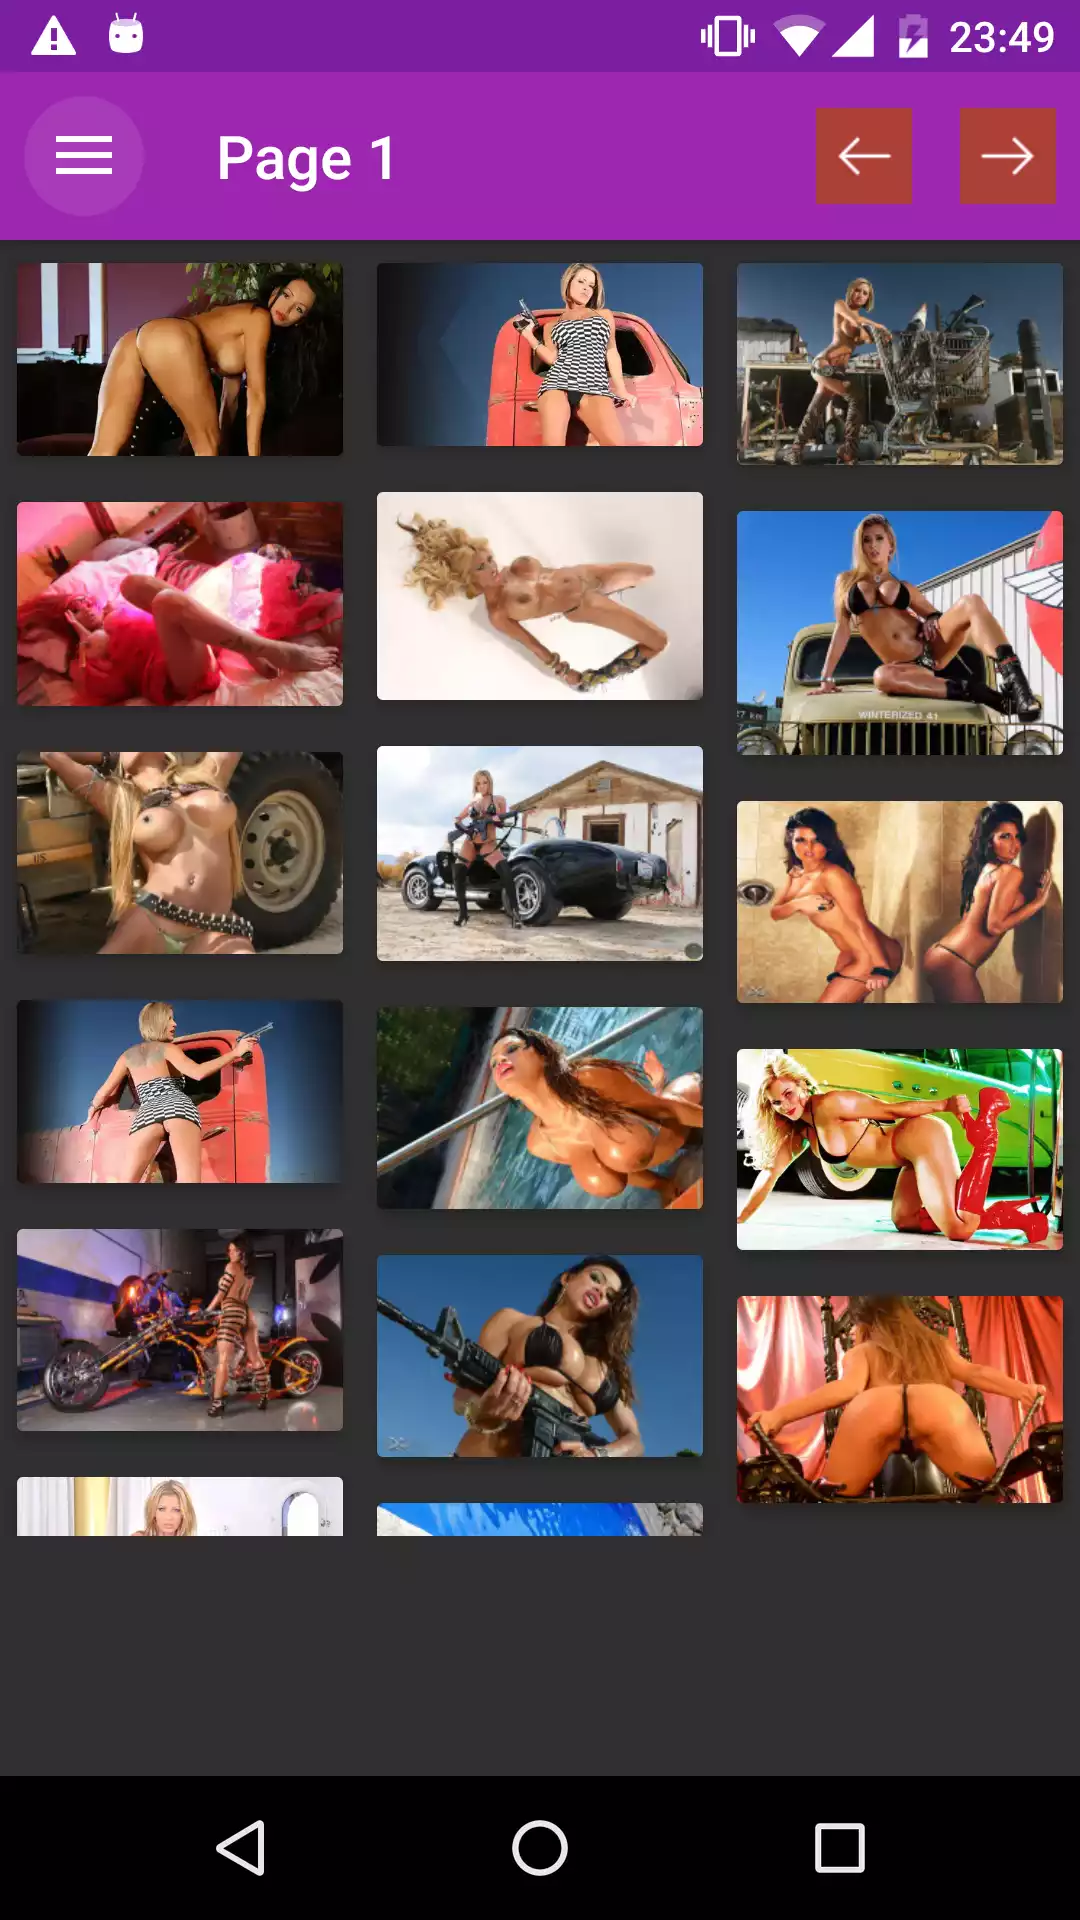 Action Wallpapers top,photo,comics,video,updates,sexy,backgrounds,shemale,image,futanari,pornstar,hentai,porn,apps,apk,adult,galleries,puzzle,wallpapers,erotic